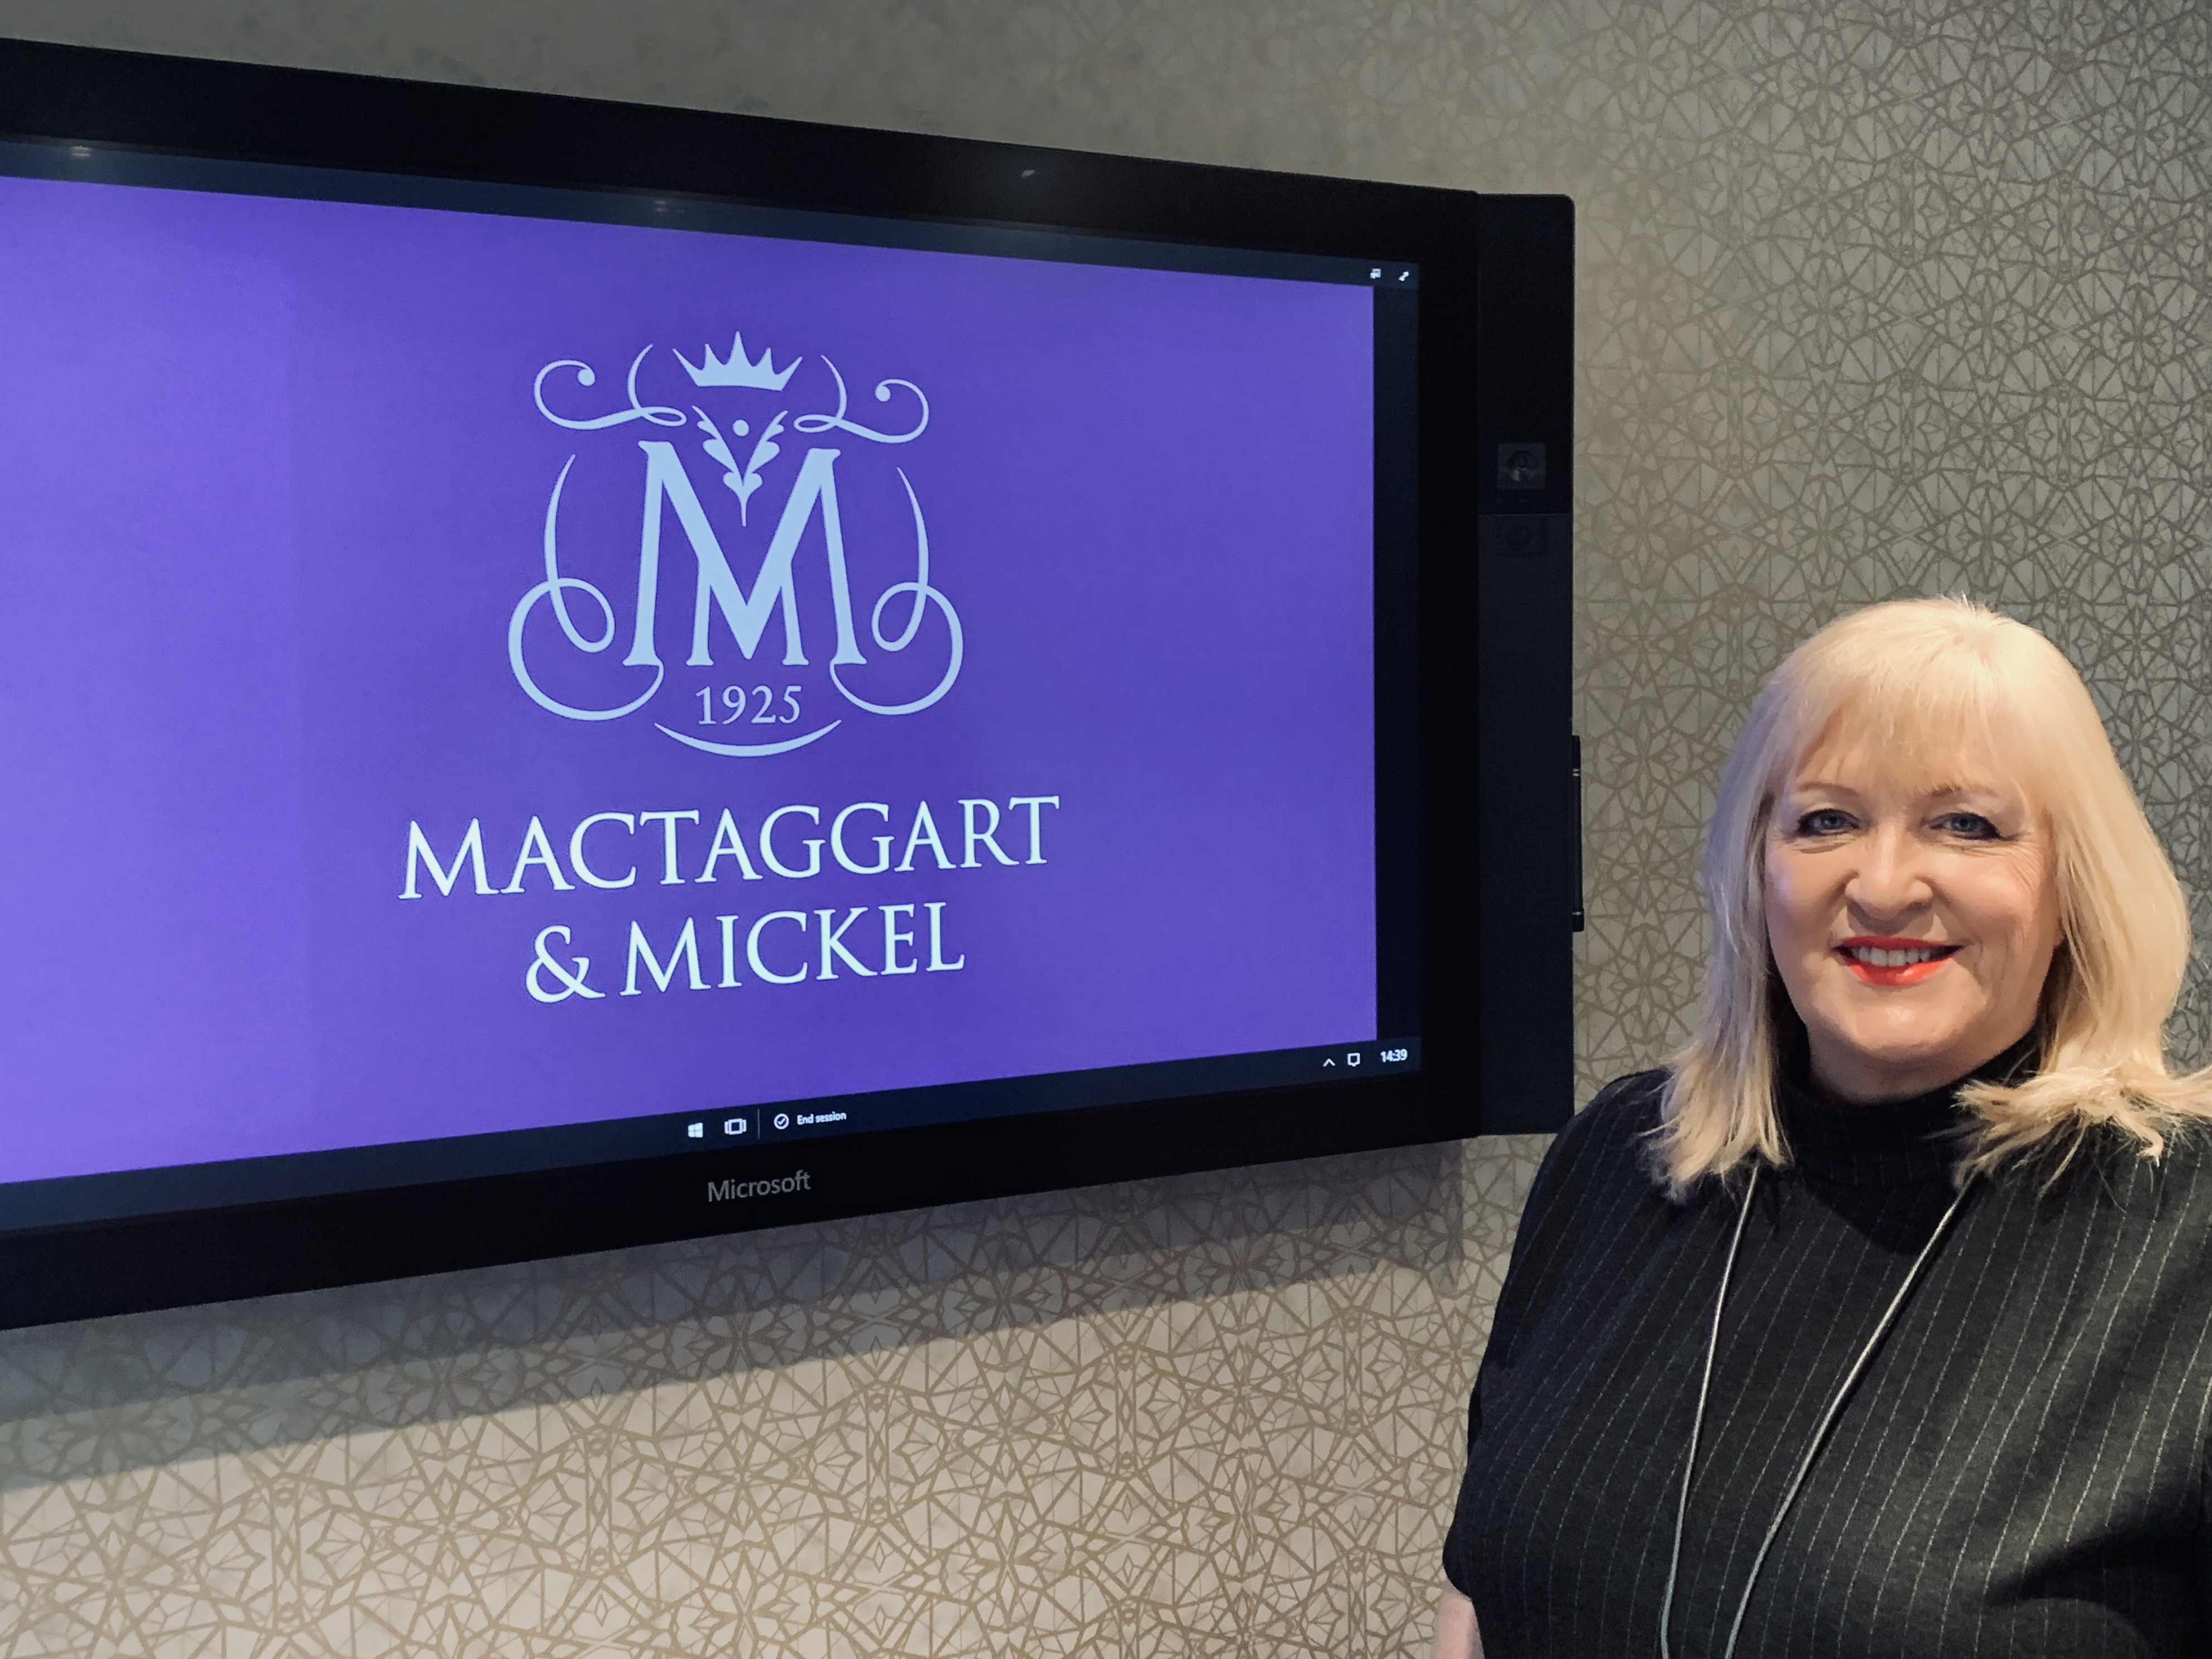 Mactaggart & Mickel provides boost to food banks